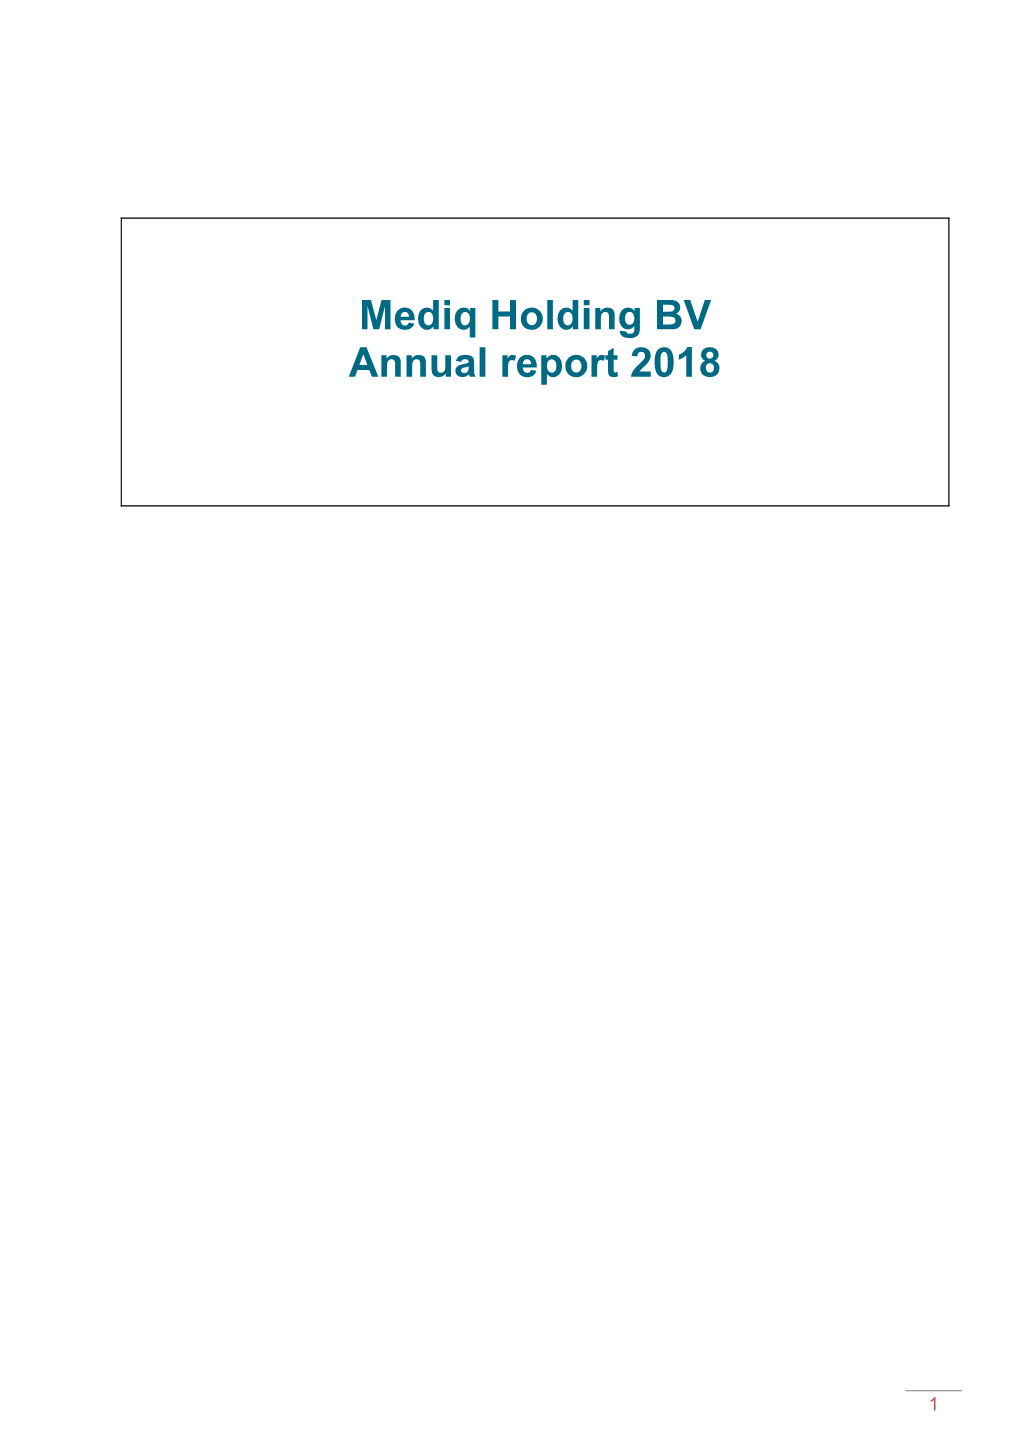 Mediq Holding BV Annual Report 2018